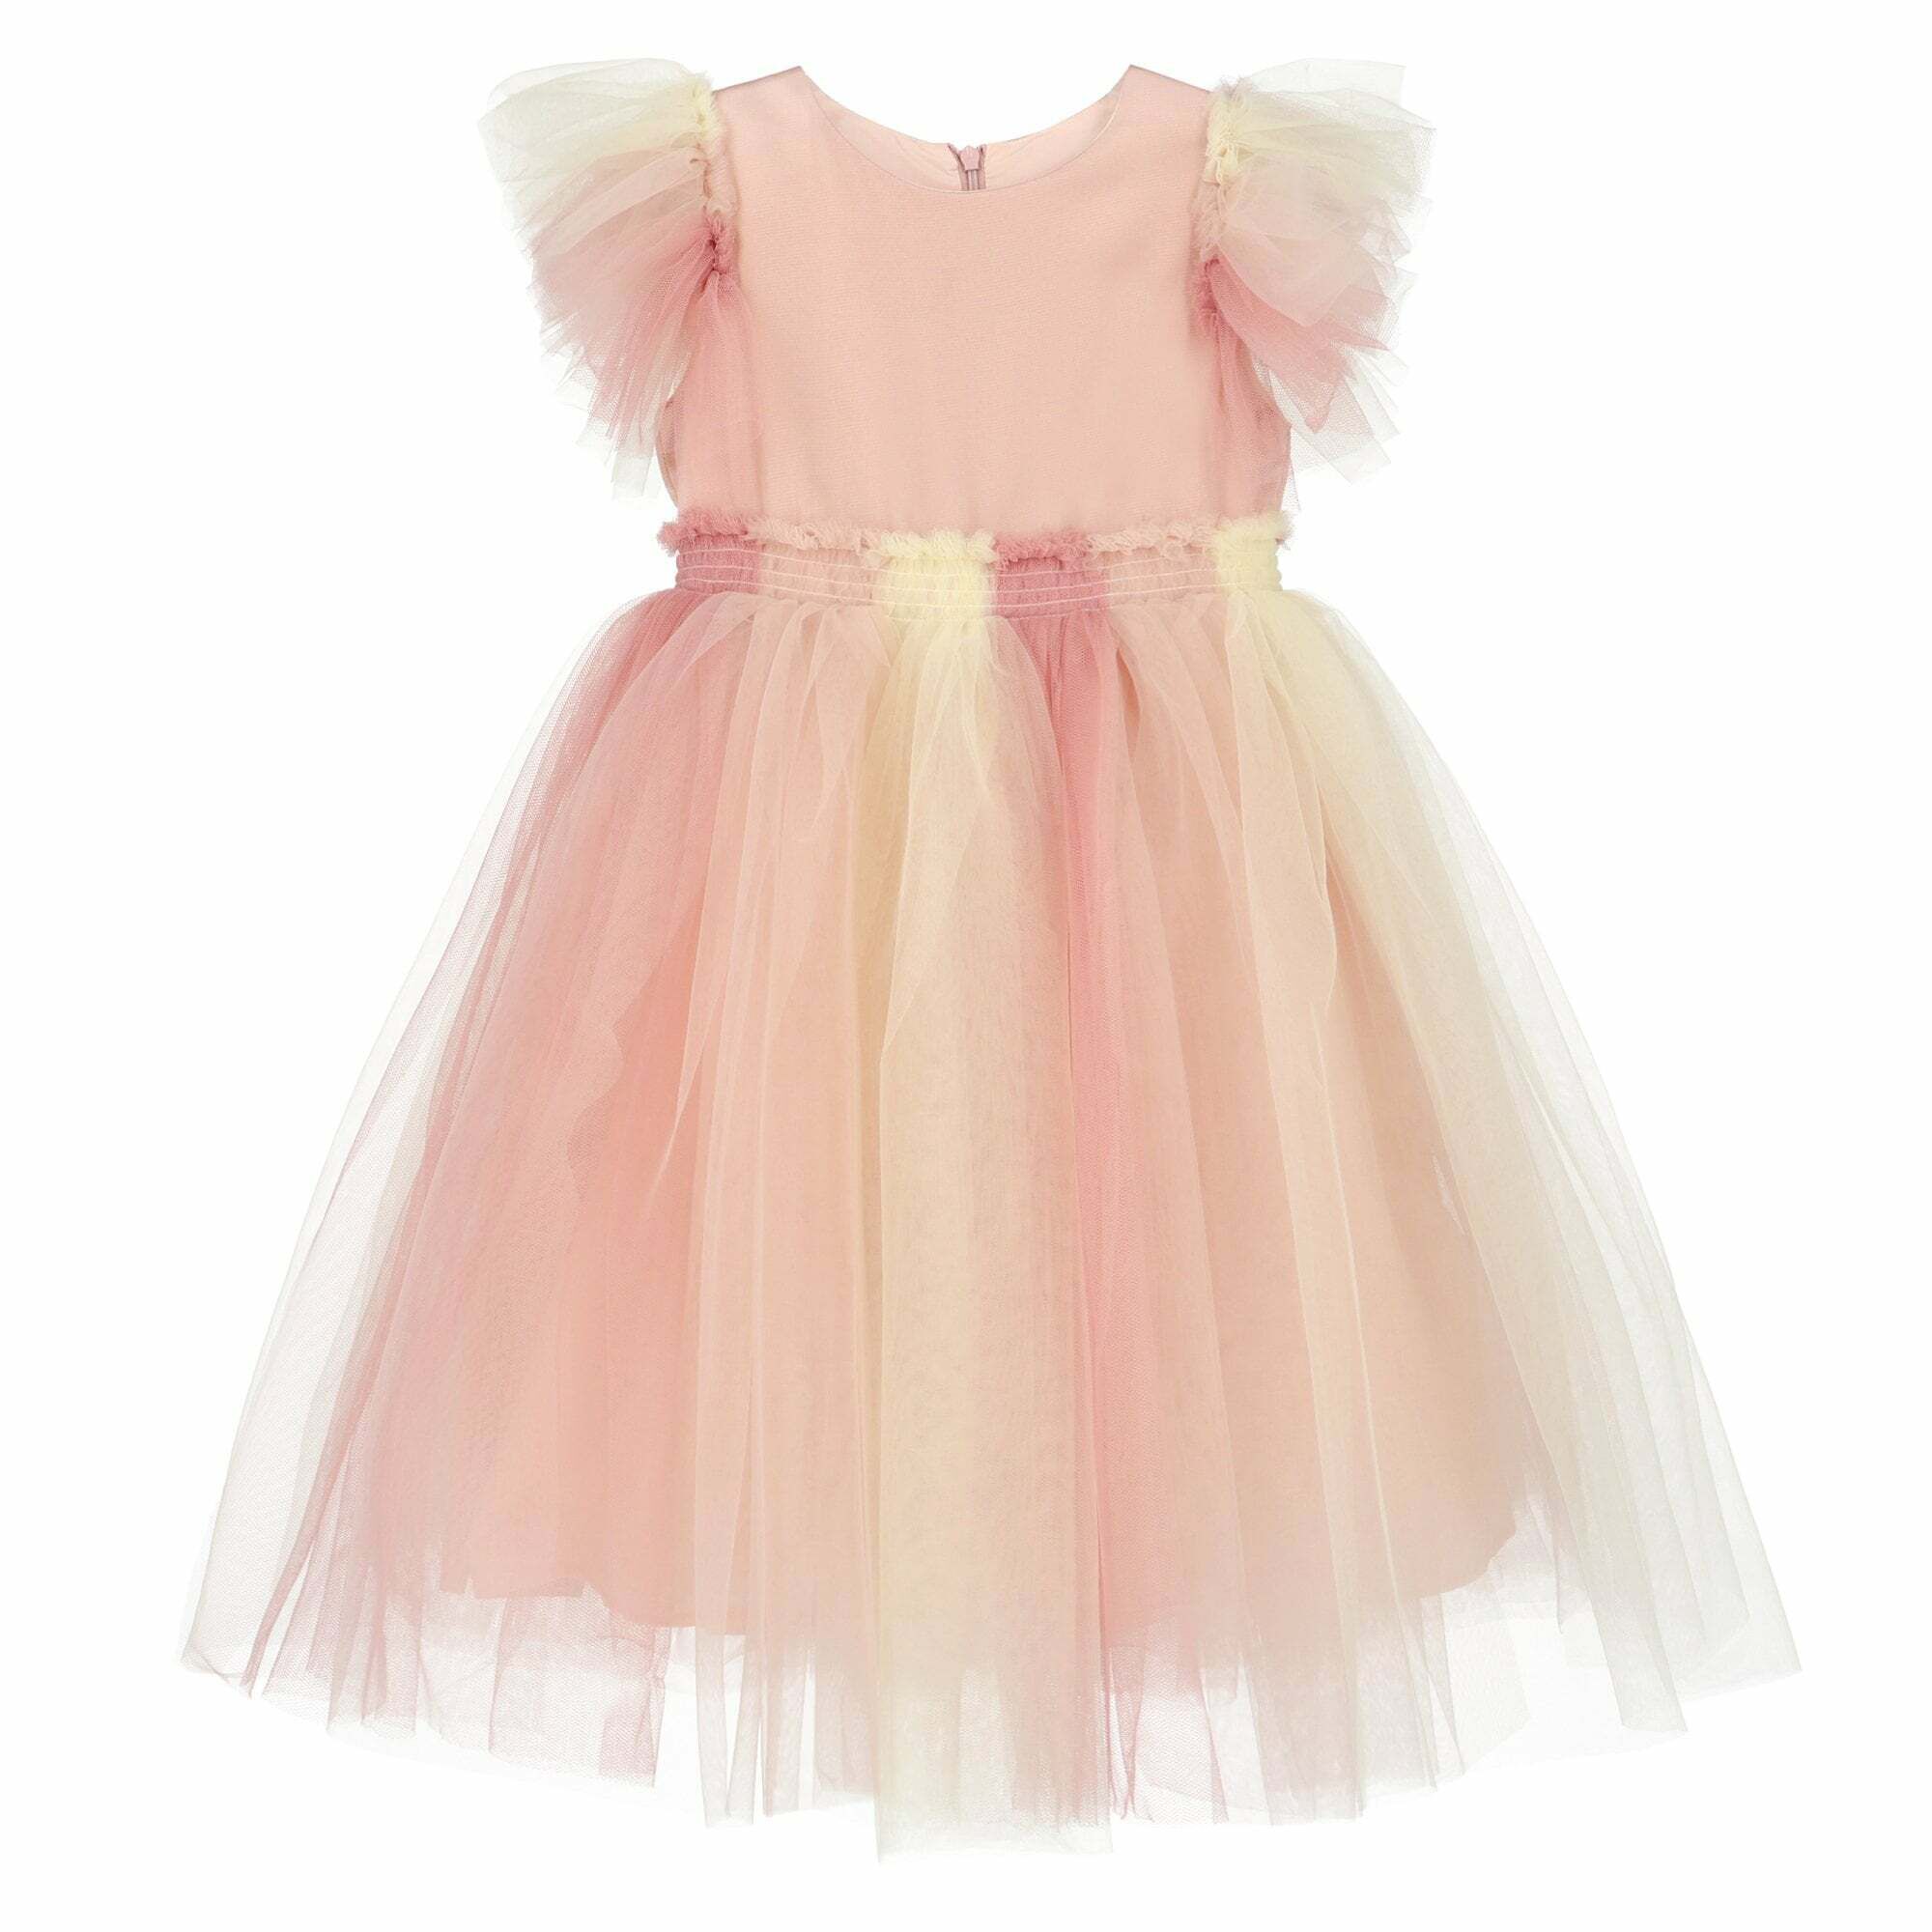 Patachou tulle-detail short-sleeved dress - Pink